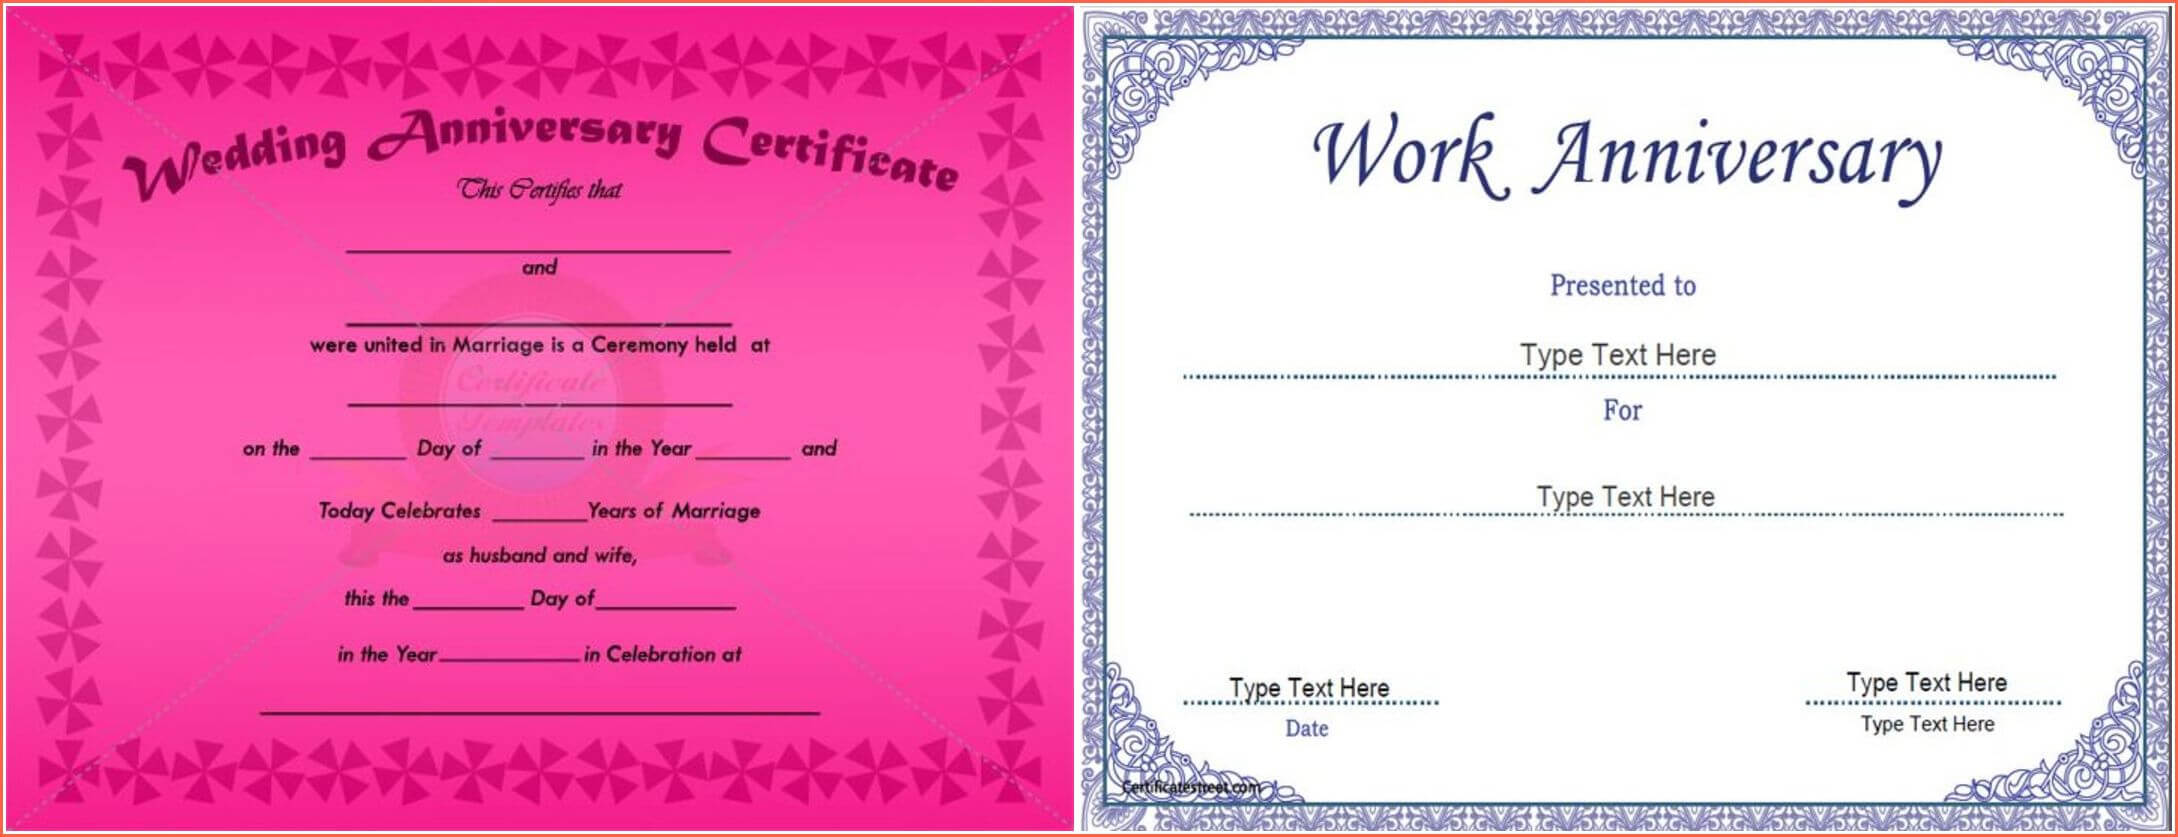 Wedding Anniversary Certificate Template Free With 25Th Gift Inside Anniversary Certificate Template Free